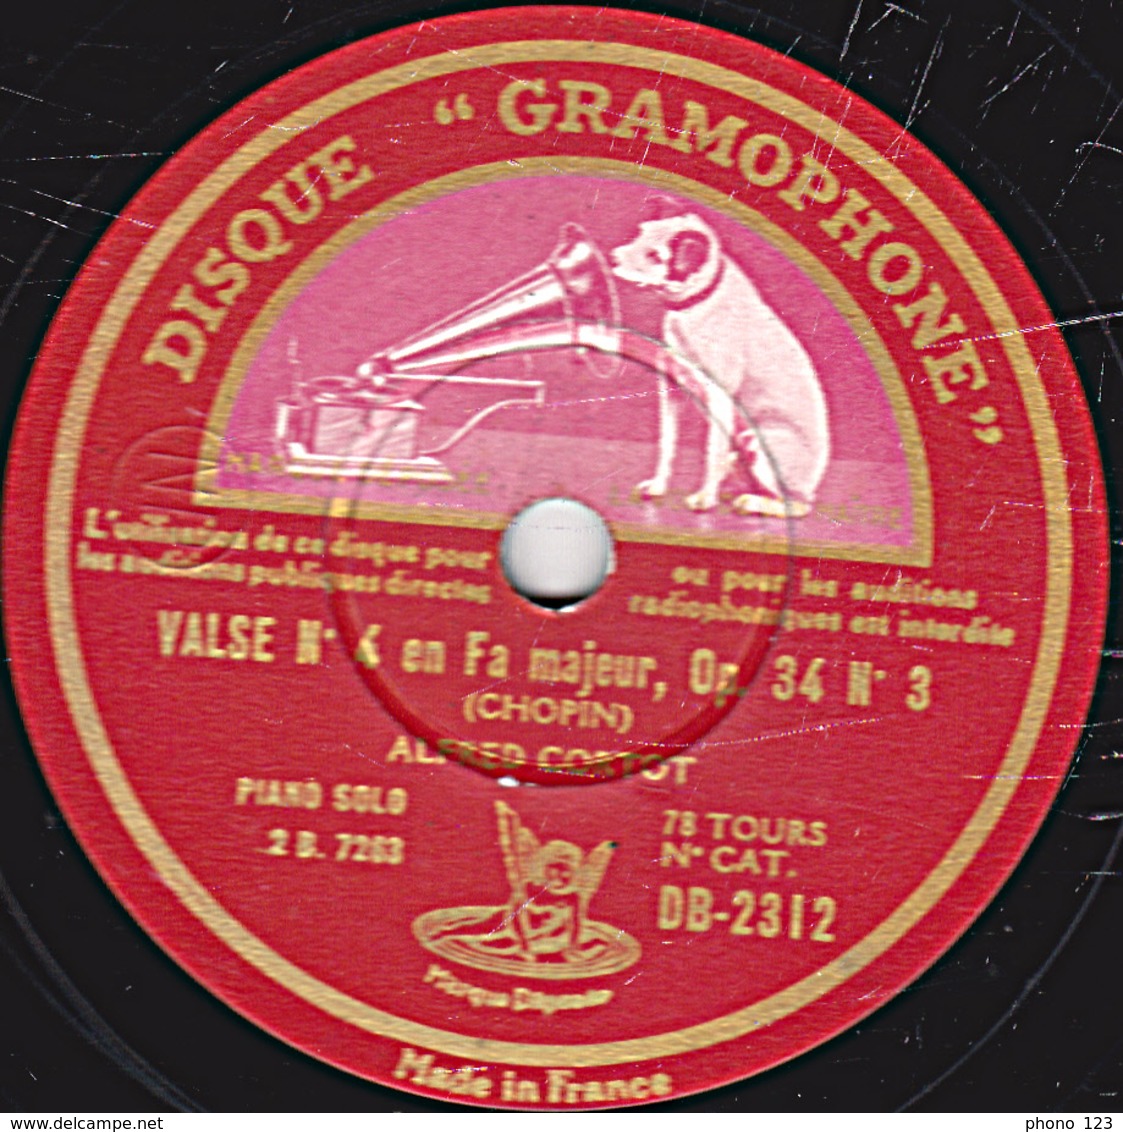 78 Trs 30 Cm état TB (CHOPIN) VALSE N°2 En La Mineur Op. 34 N°2  VALSE N°4 En Fa Majeur Op. 34 N°3- Alfred CORTOT PIANO - 78 T - Disques Pour Gramophone